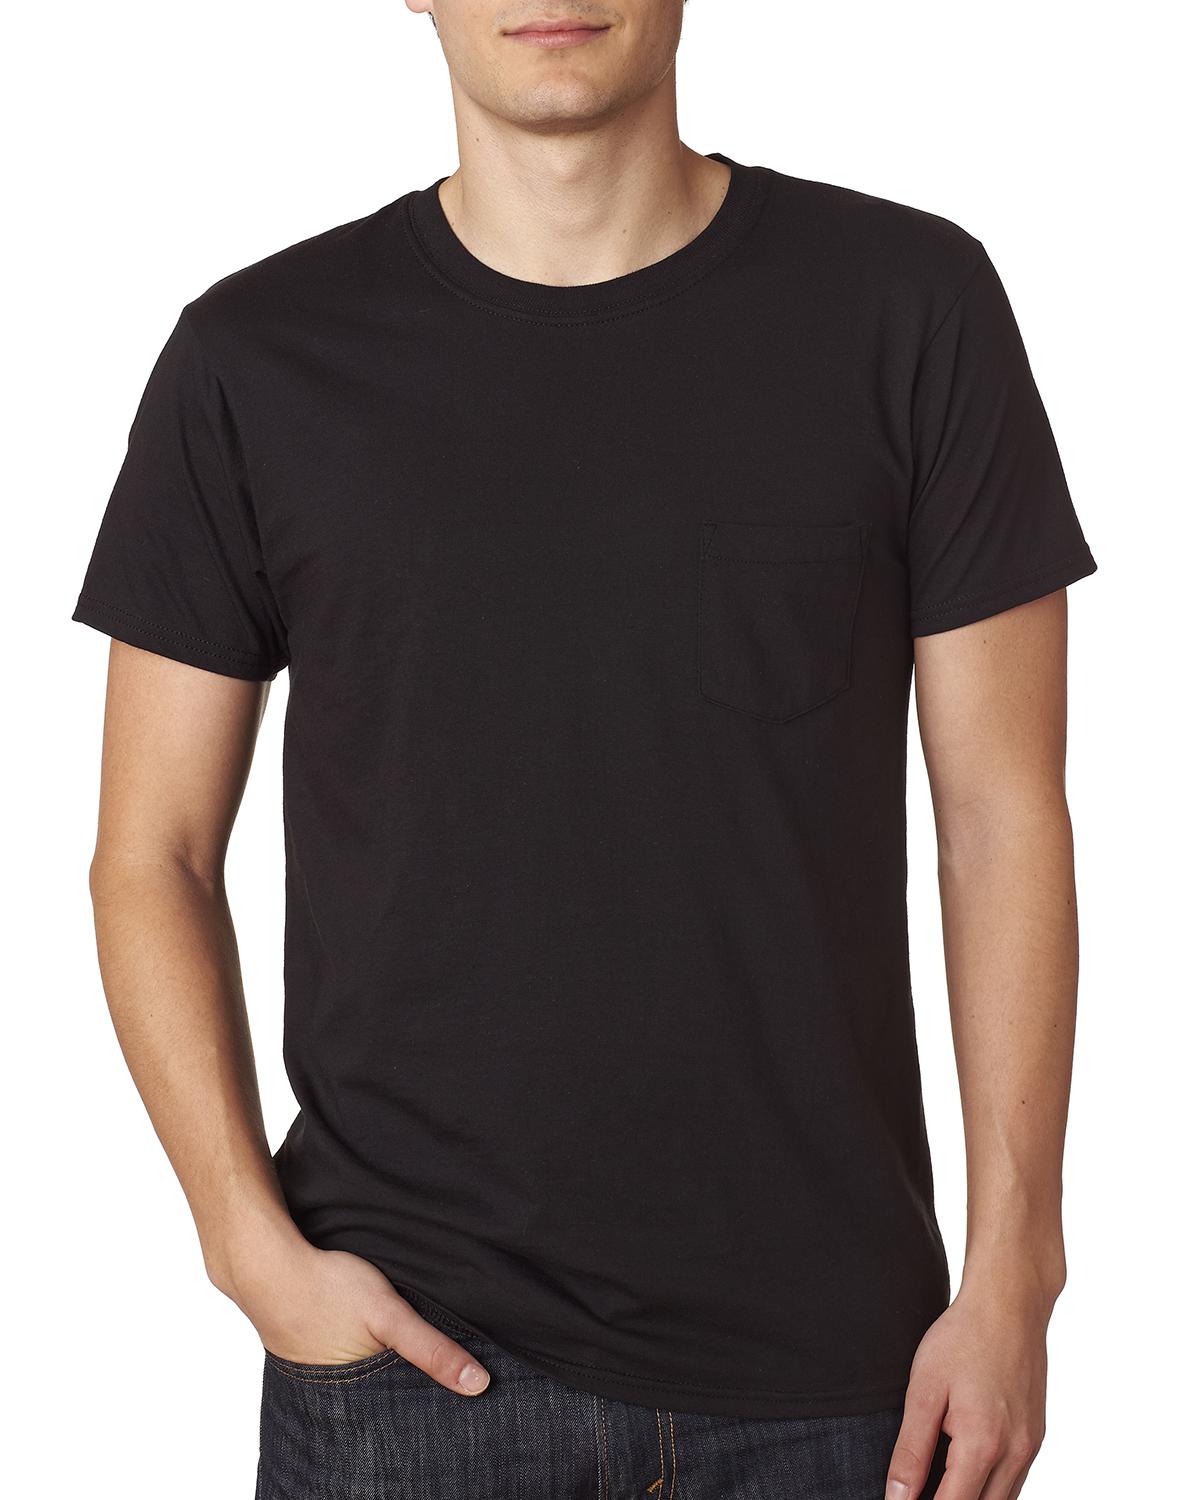 4980 Nano 100% Ringspun Cotton Tee Short Sleeve Tag-Free T-Shirt S-3XL Hanes